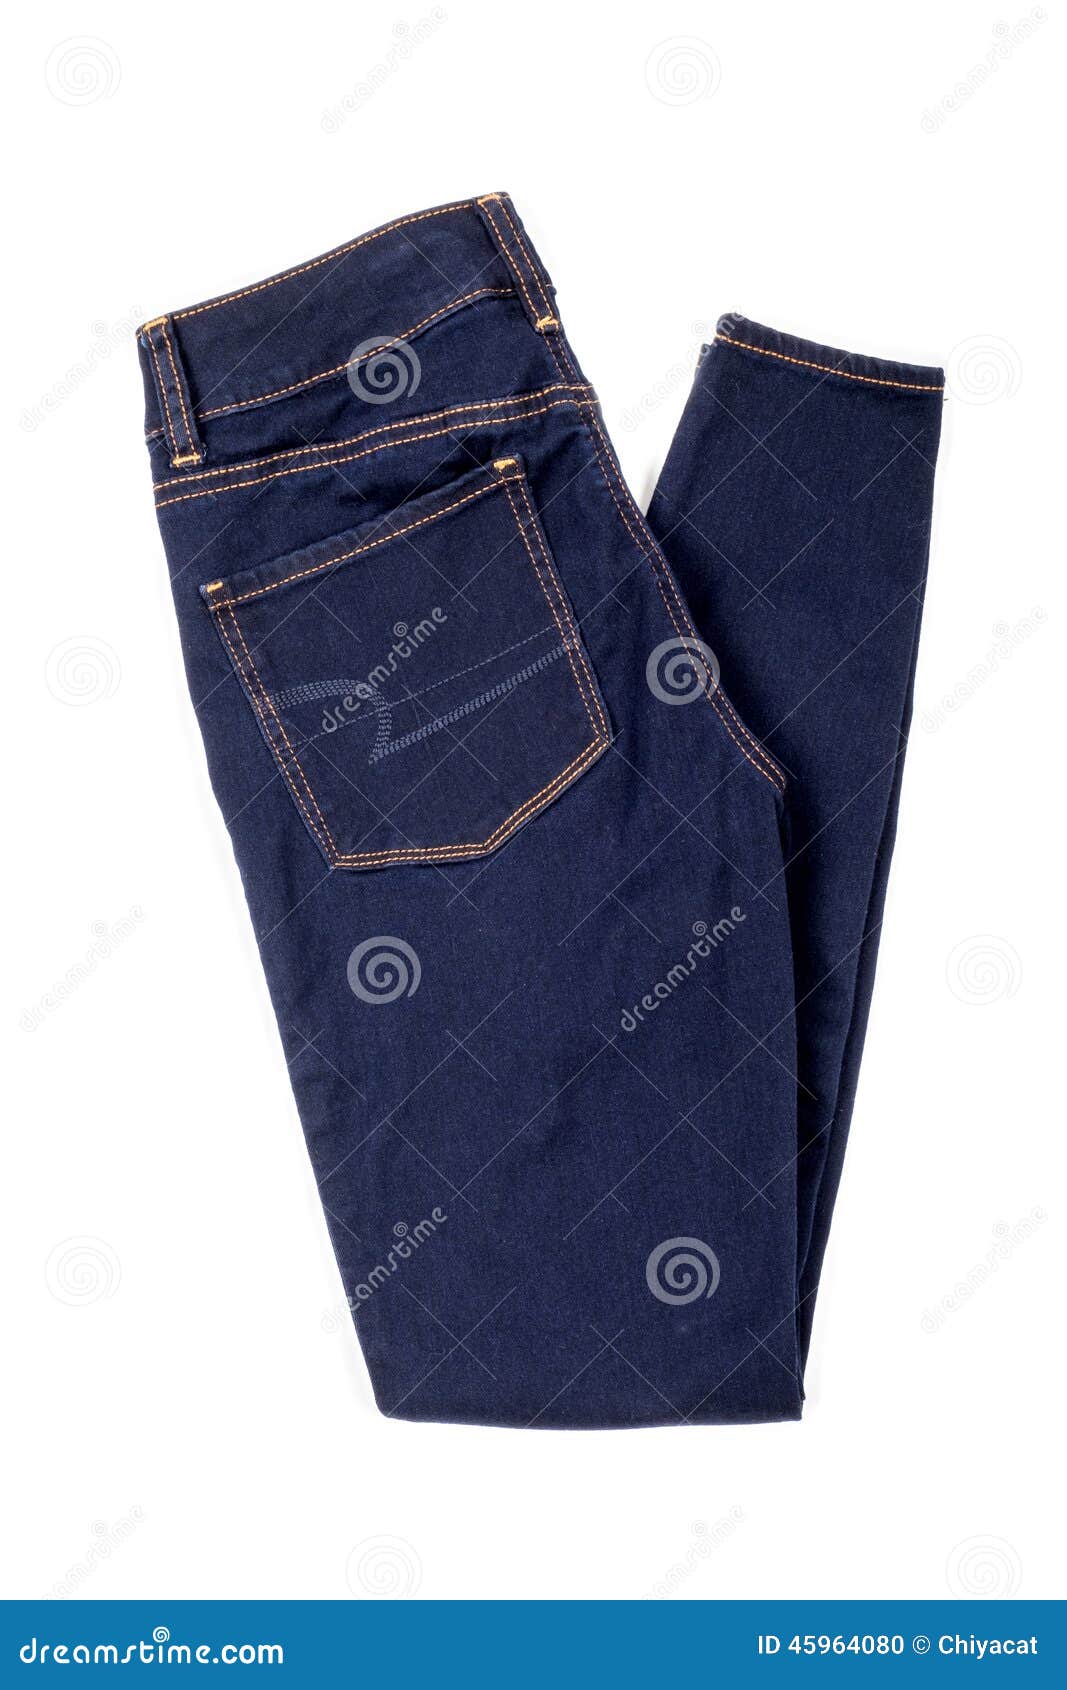 Blue Denim Jeans #2 stock photo. Image of jeans, jeggings - 45964080